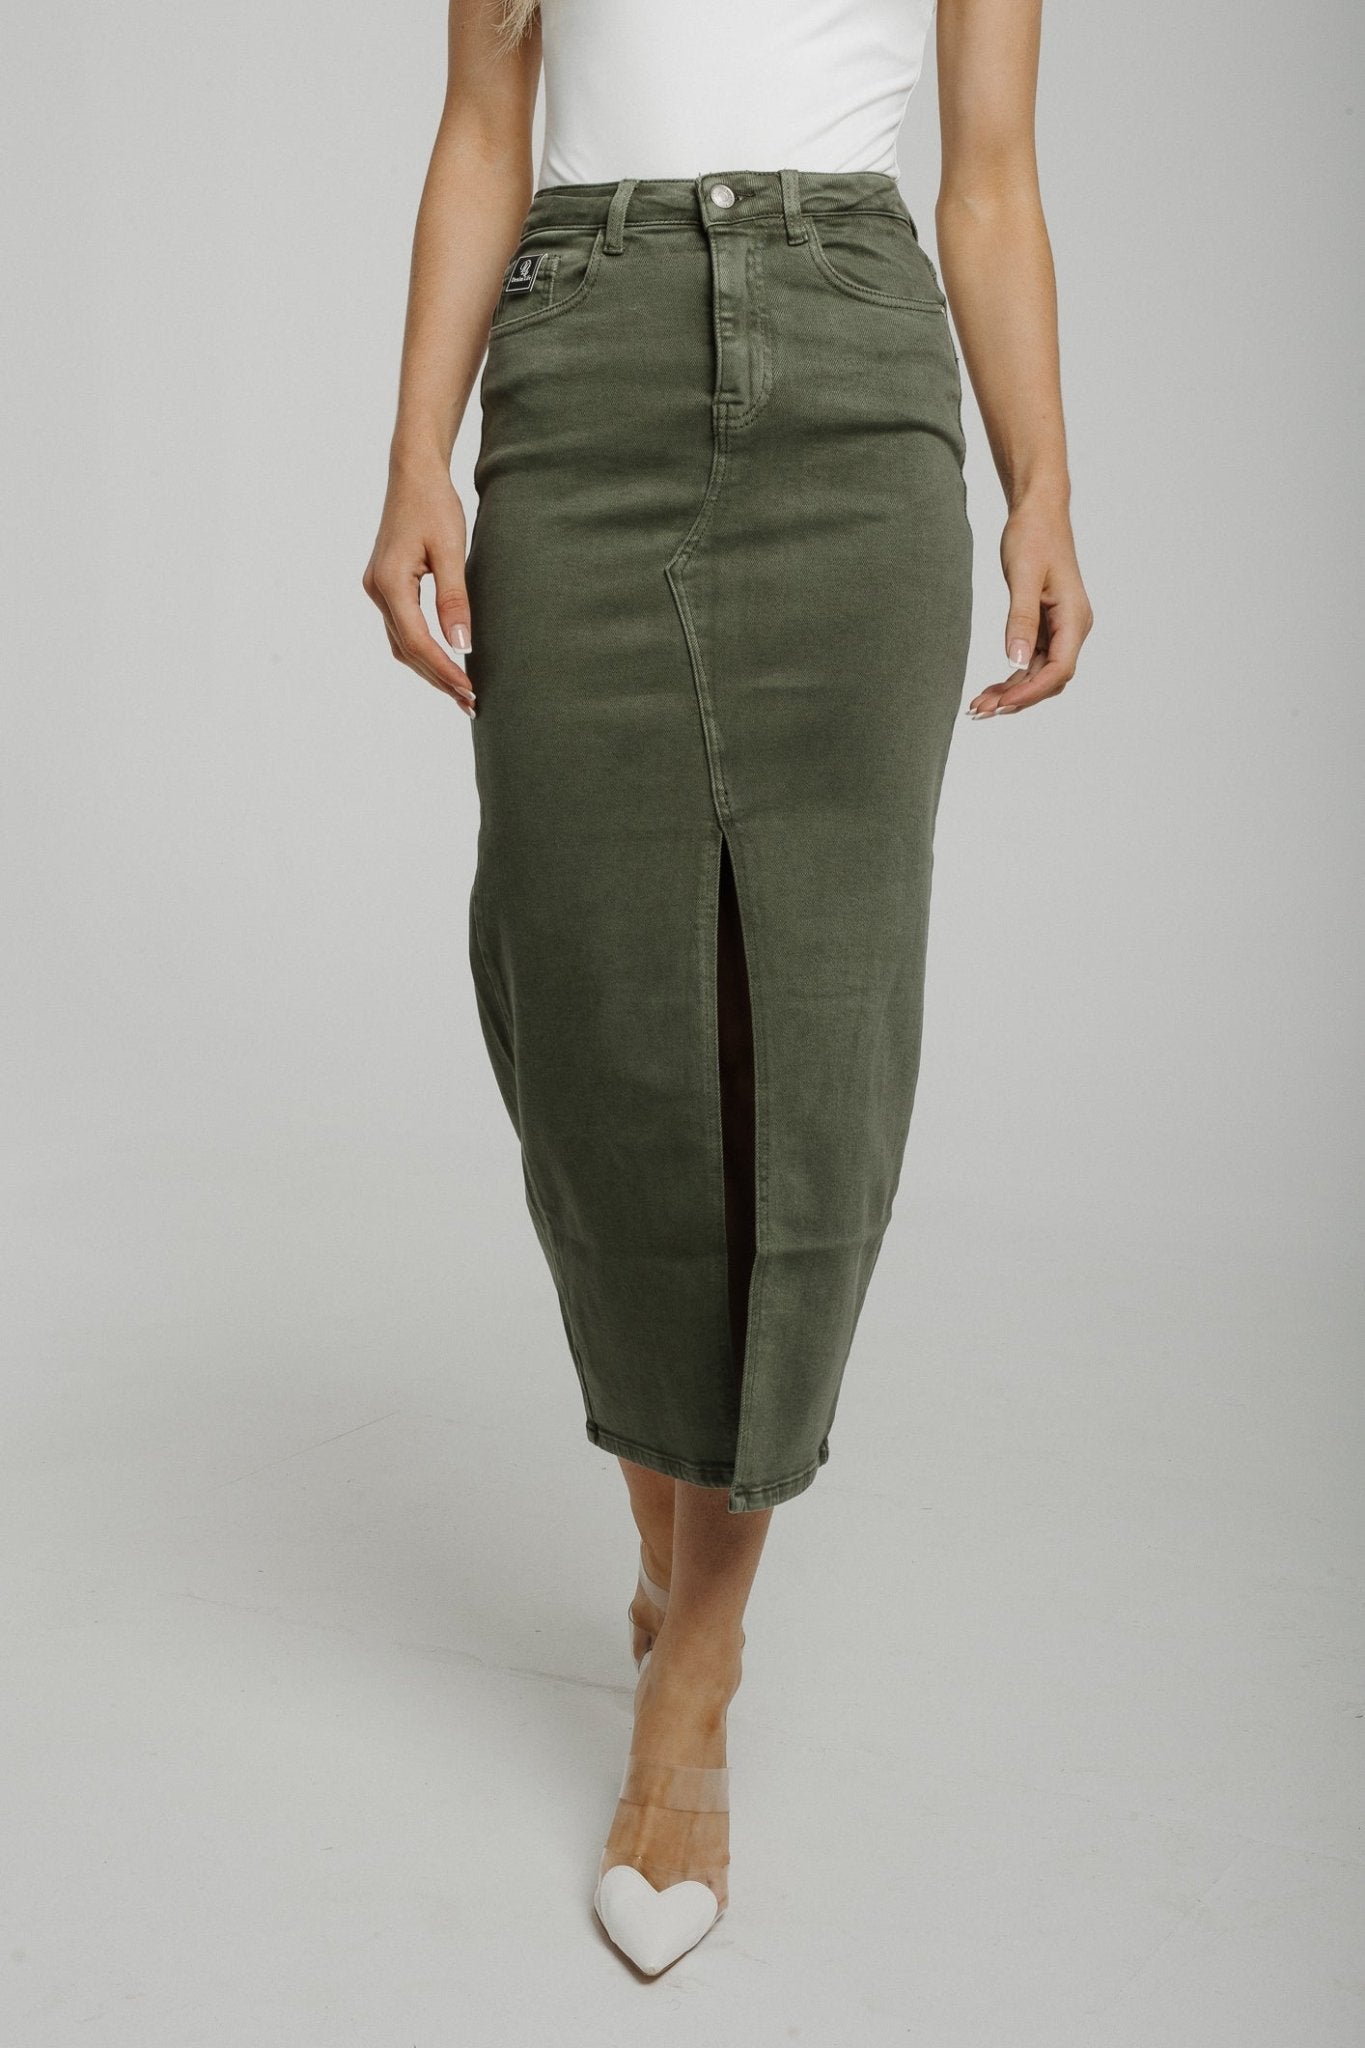 Polly Denim Maxi Skirt In Khaki - The Walk in Wardrobe